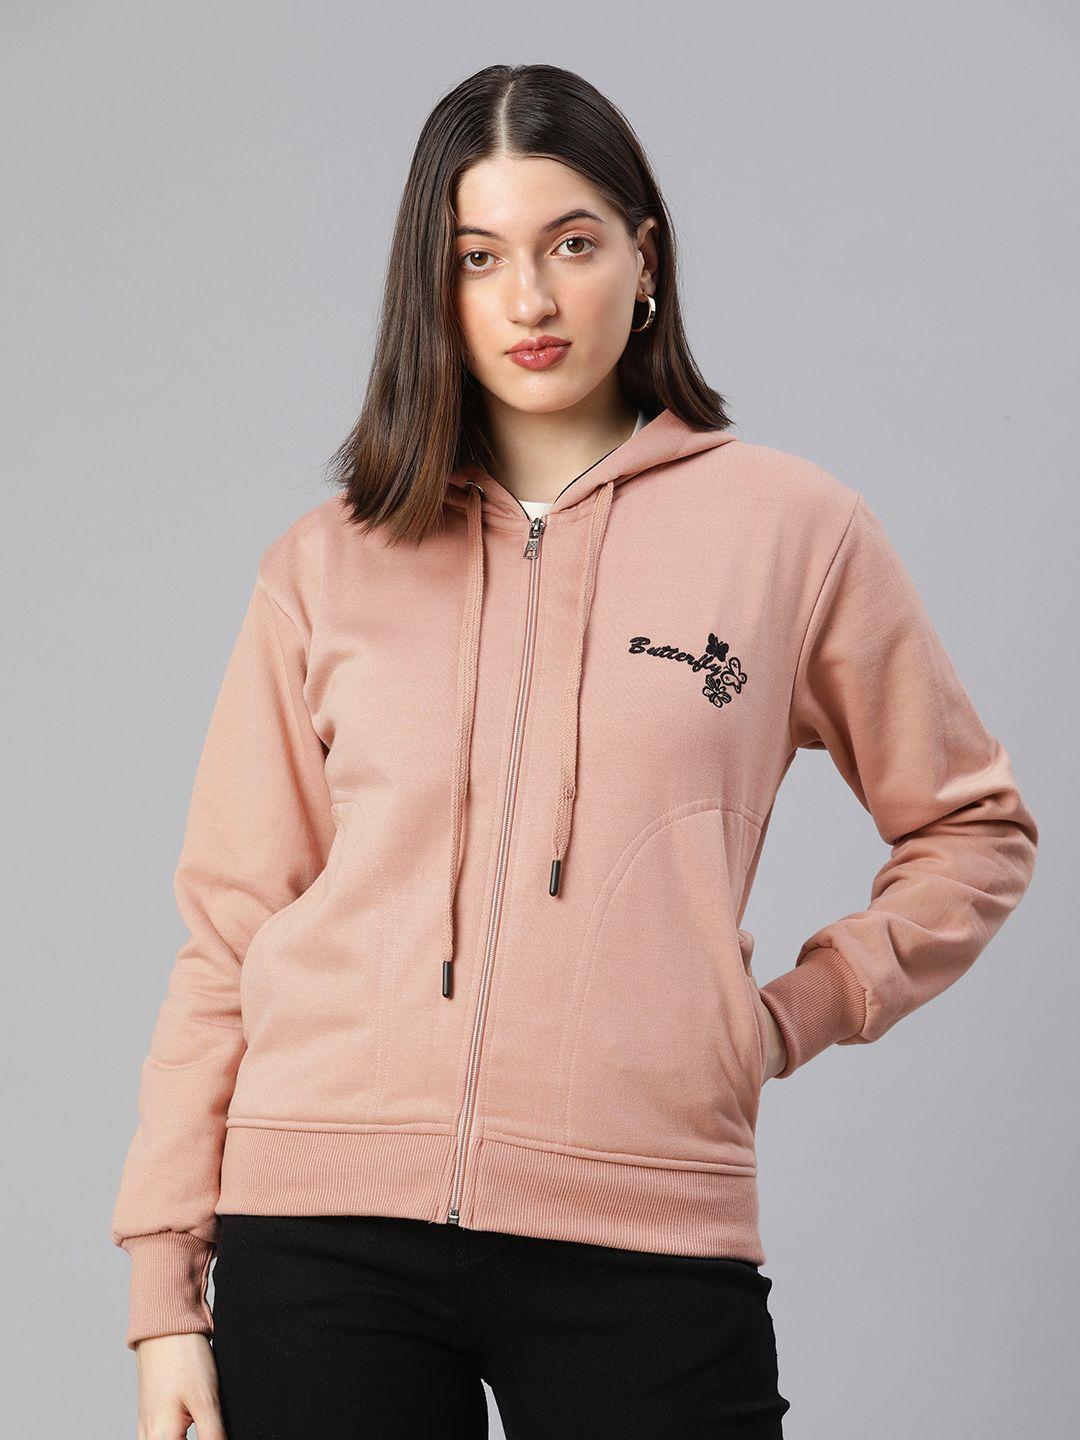 adbucks embroidered hooded sweatshirt